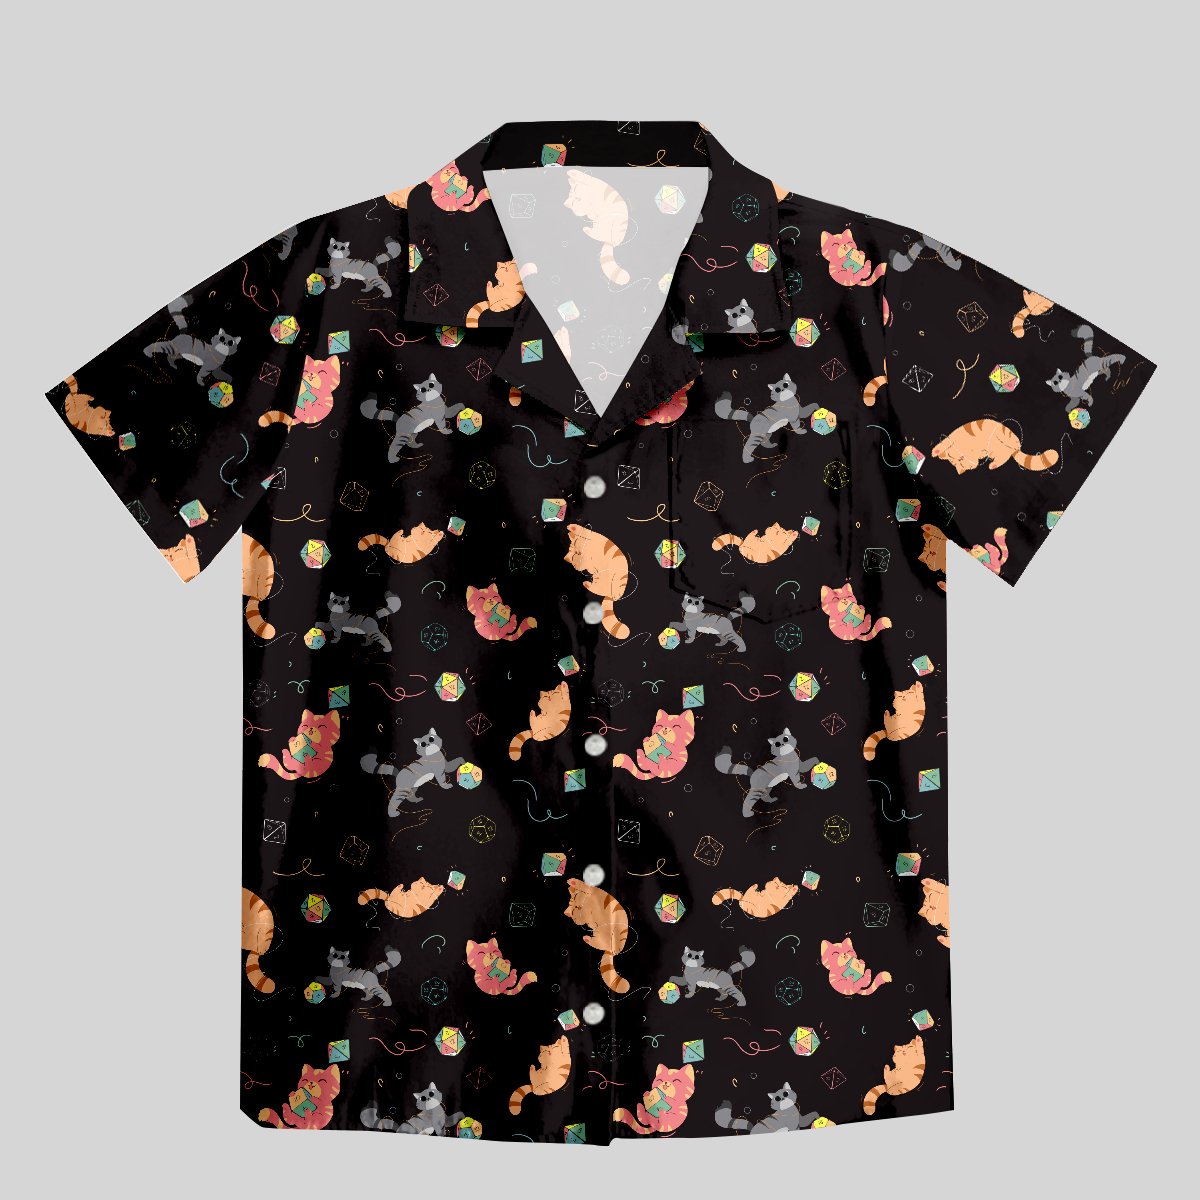 Geeksoutfit DND Dice Cat Button Up Pocket Shirt for Sale online